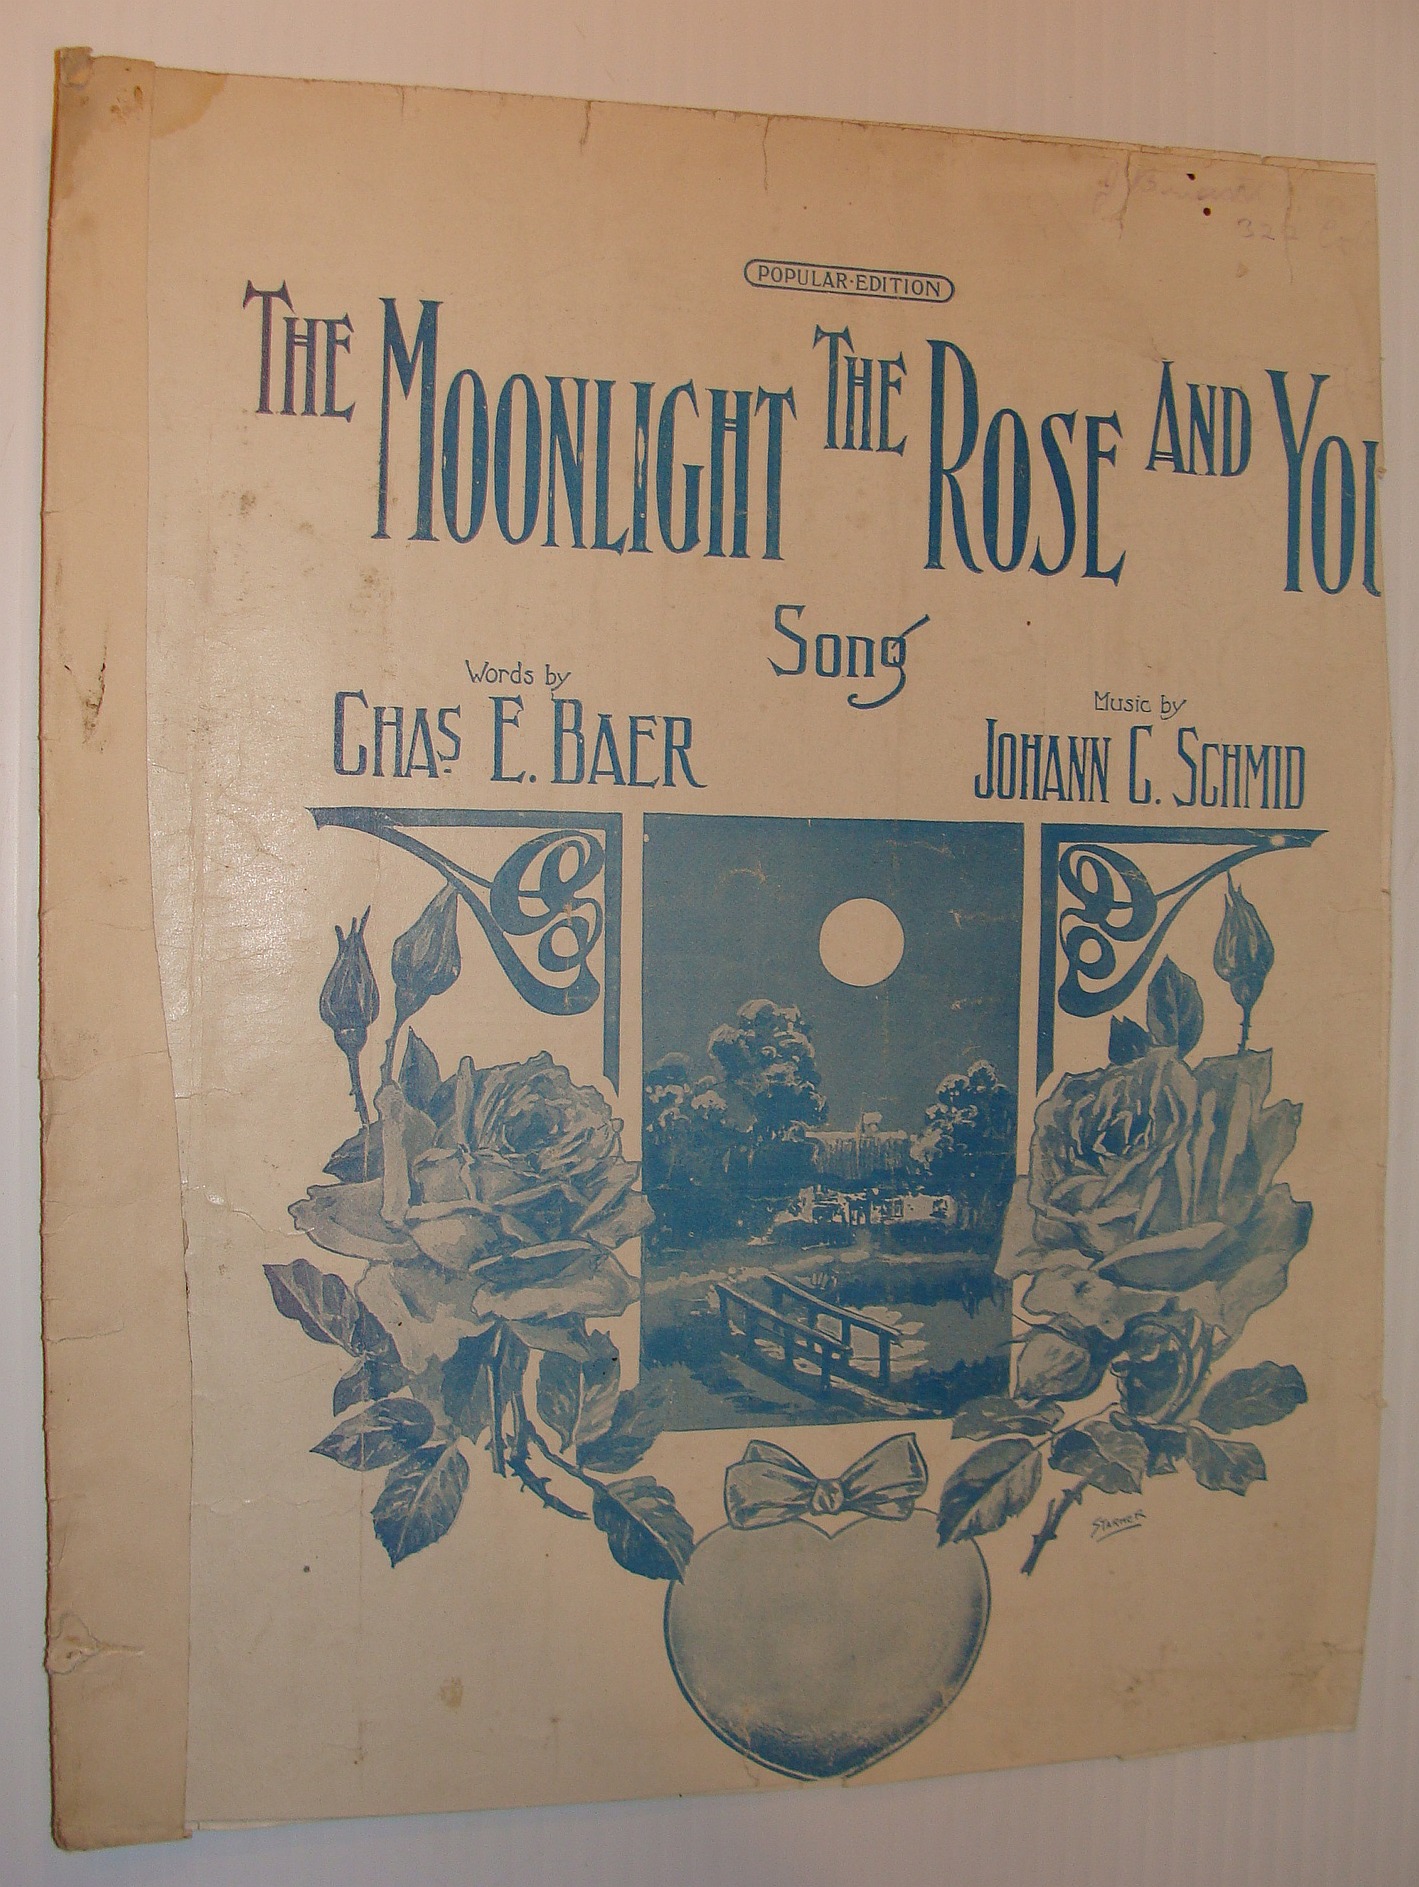 BAER, CHARLE E.; SCHMID, JOHANN C. - The Moonlight the Rose and You - Sheet Music